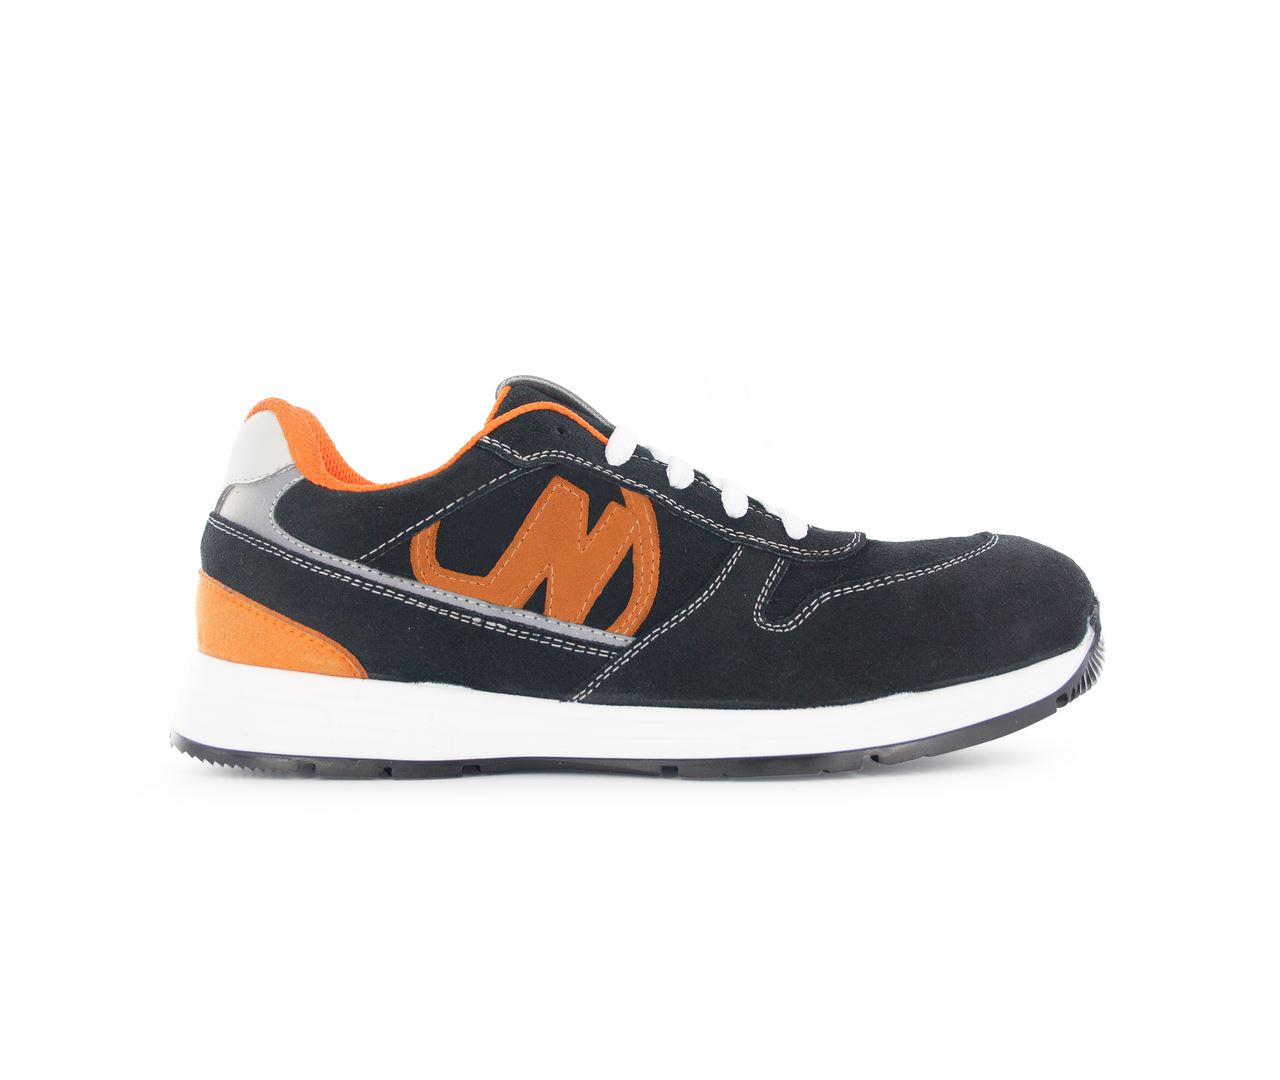 Chaussure de sécurité noir/orange Run Soft T.44 - Nord'Ways - RUN000344000NOOR